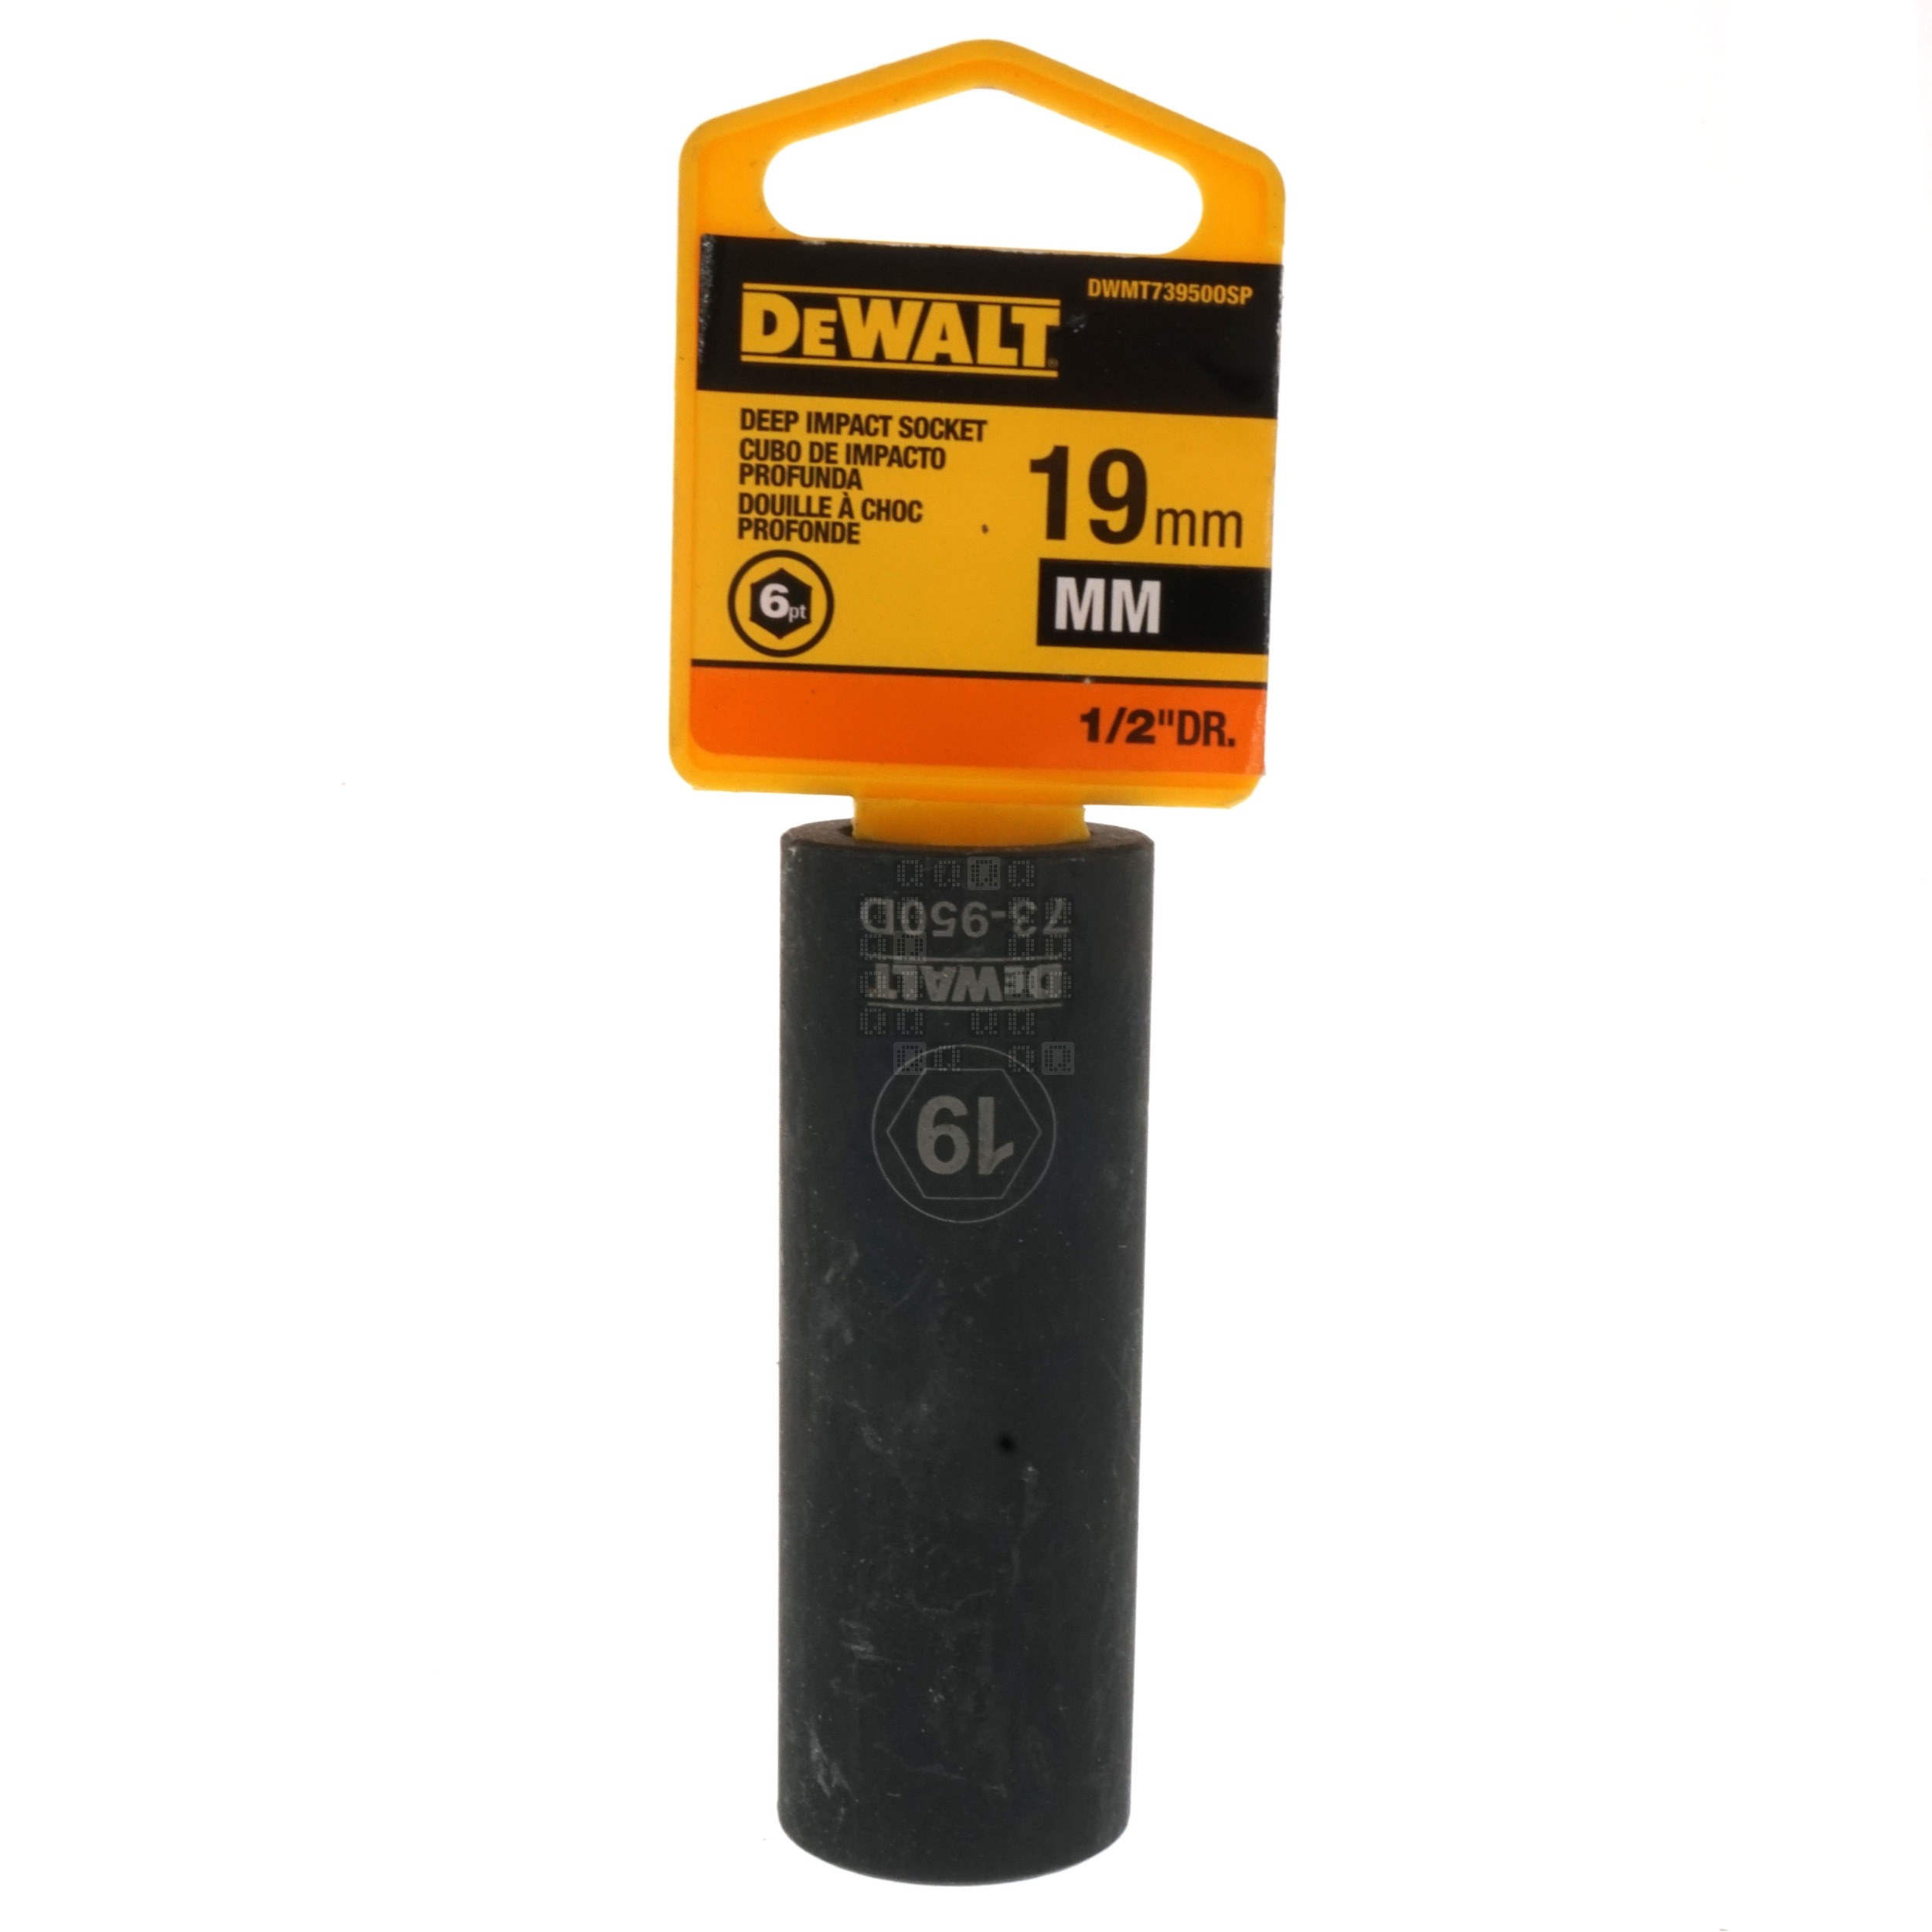 DeWALT DWMT73950OSP 19mm Black Deep Impact Socket, 1/2" Drive, 73-950D, 6-Point